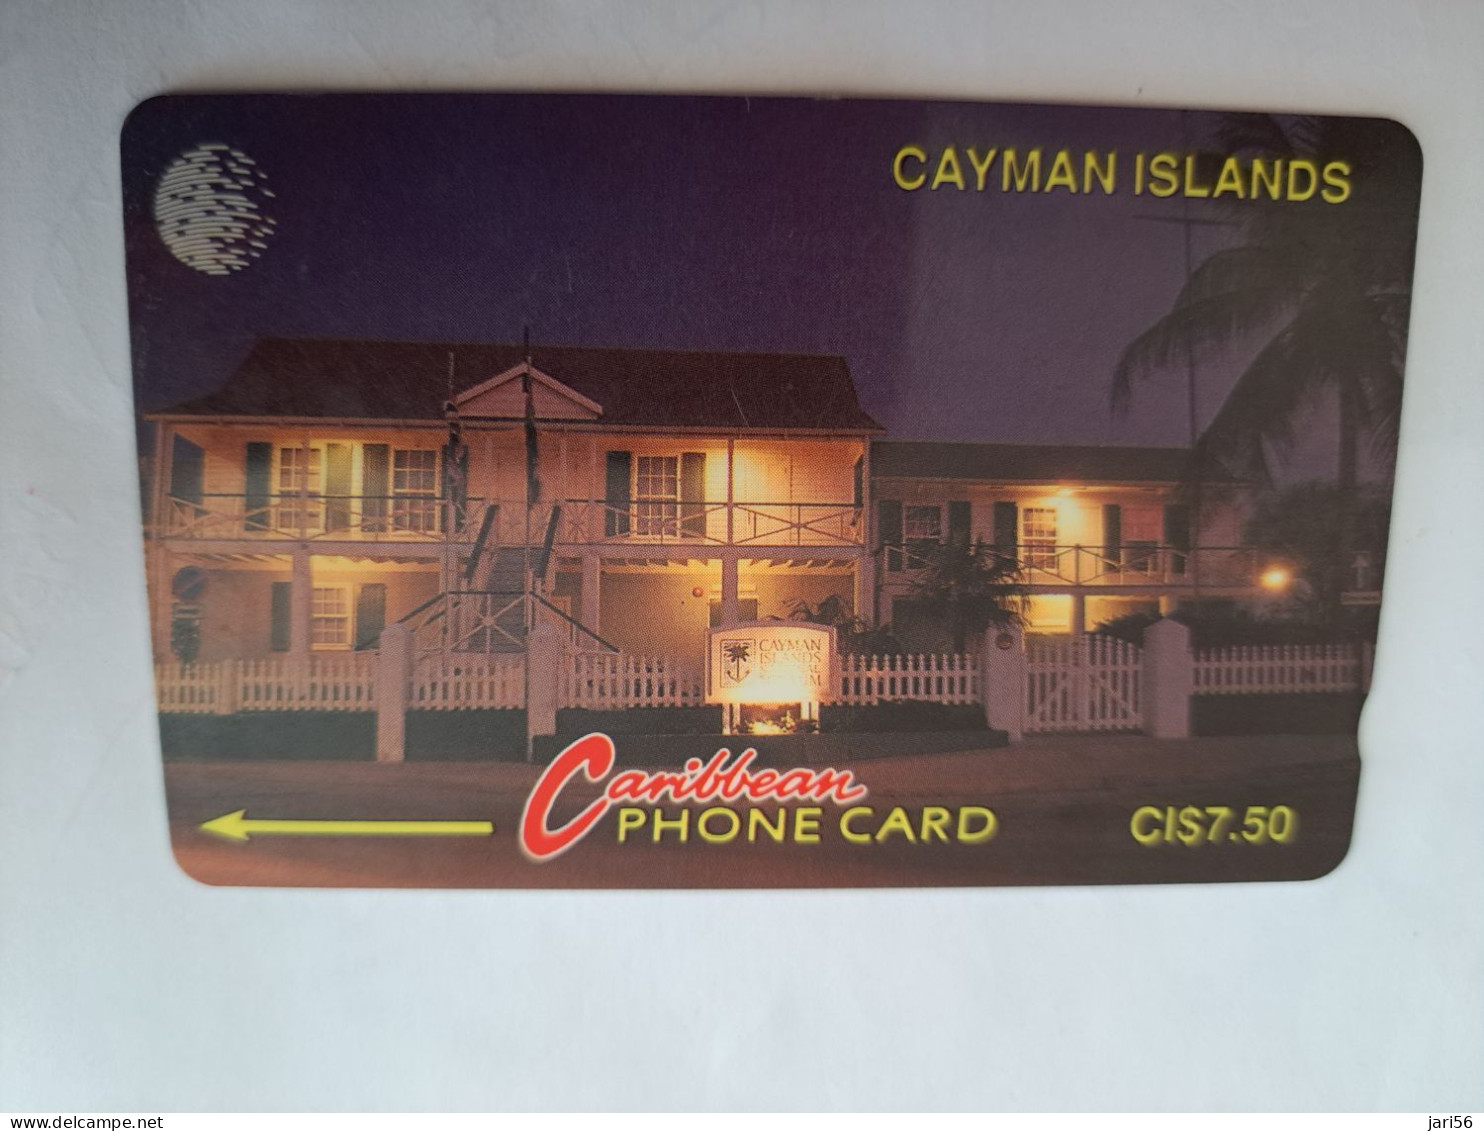 CAYMAN ISLANDS  CI $ 7,50  CAY-6C  CONTROL NR 6CCIC/SILVER/  MUSEUM AT NIGHT    NEW  LOGO     Fine Used Card  ** 14175** - Cayman Islands